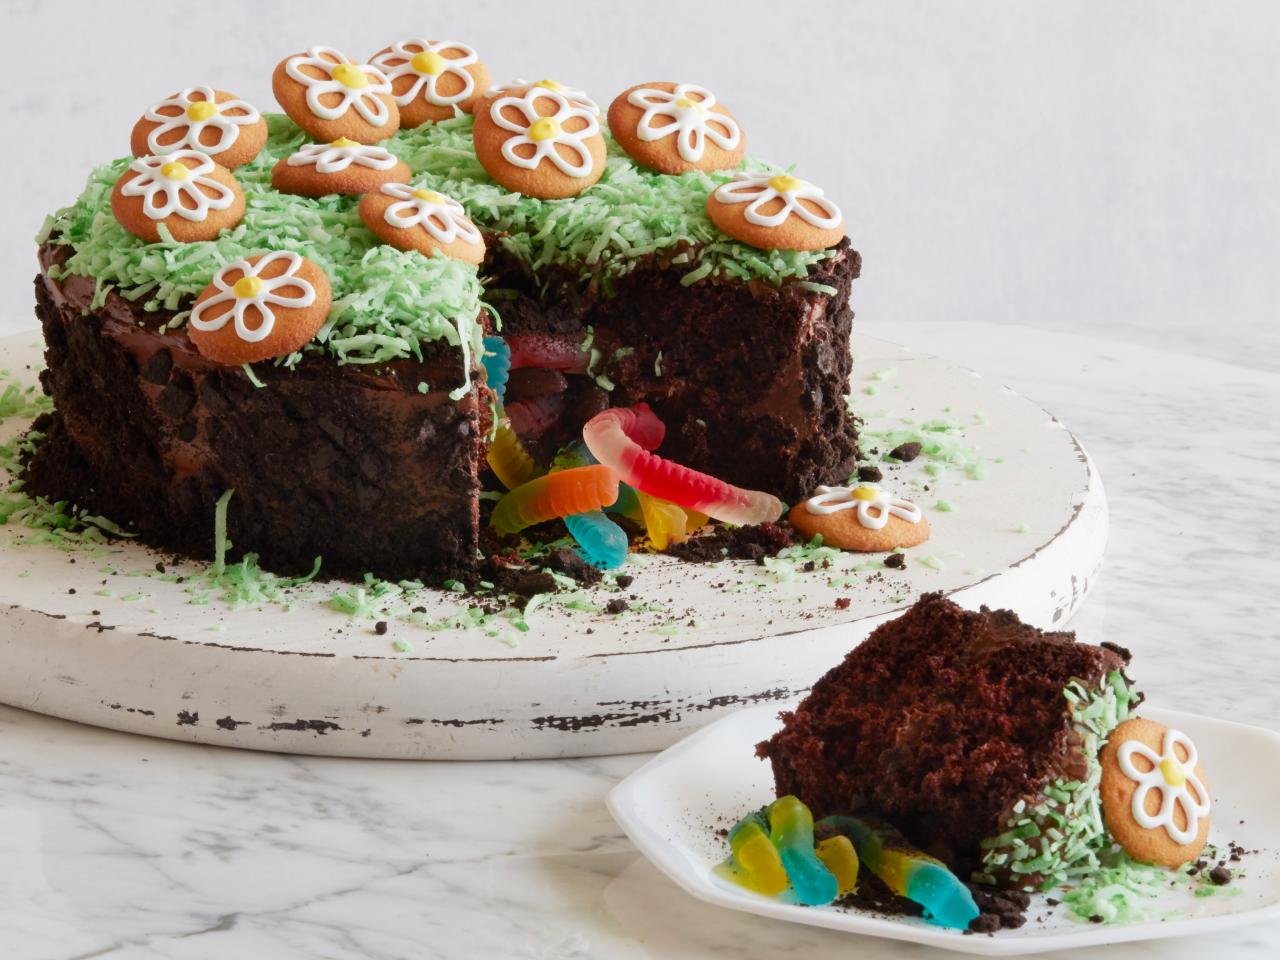 Compost bin and worms cake | Worm cake, Cake, Desserts